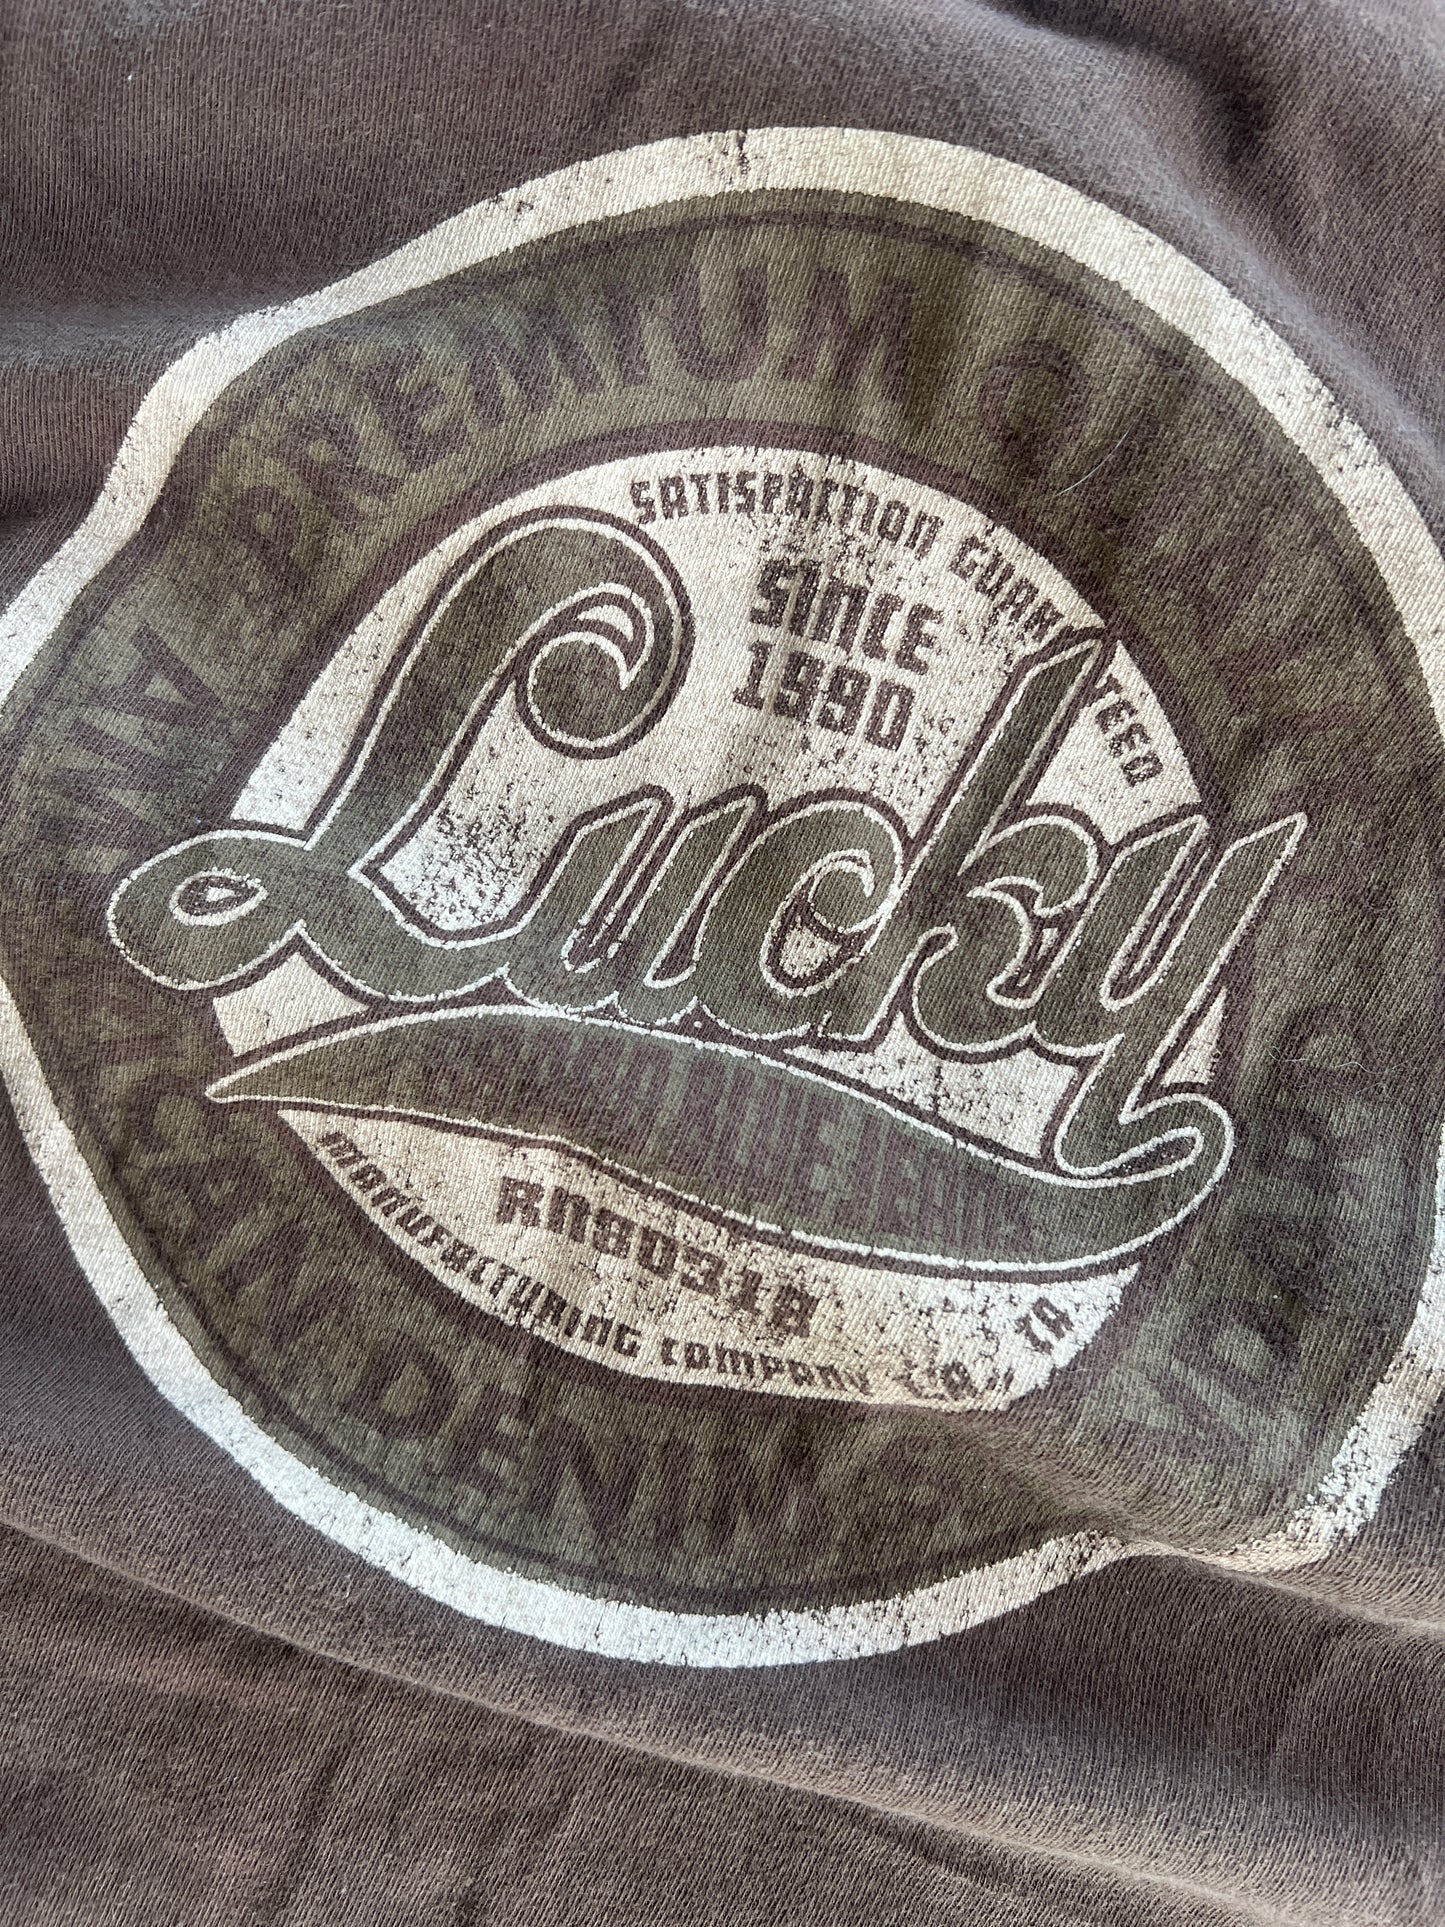 Vintage Lucky Brand Shirt - M